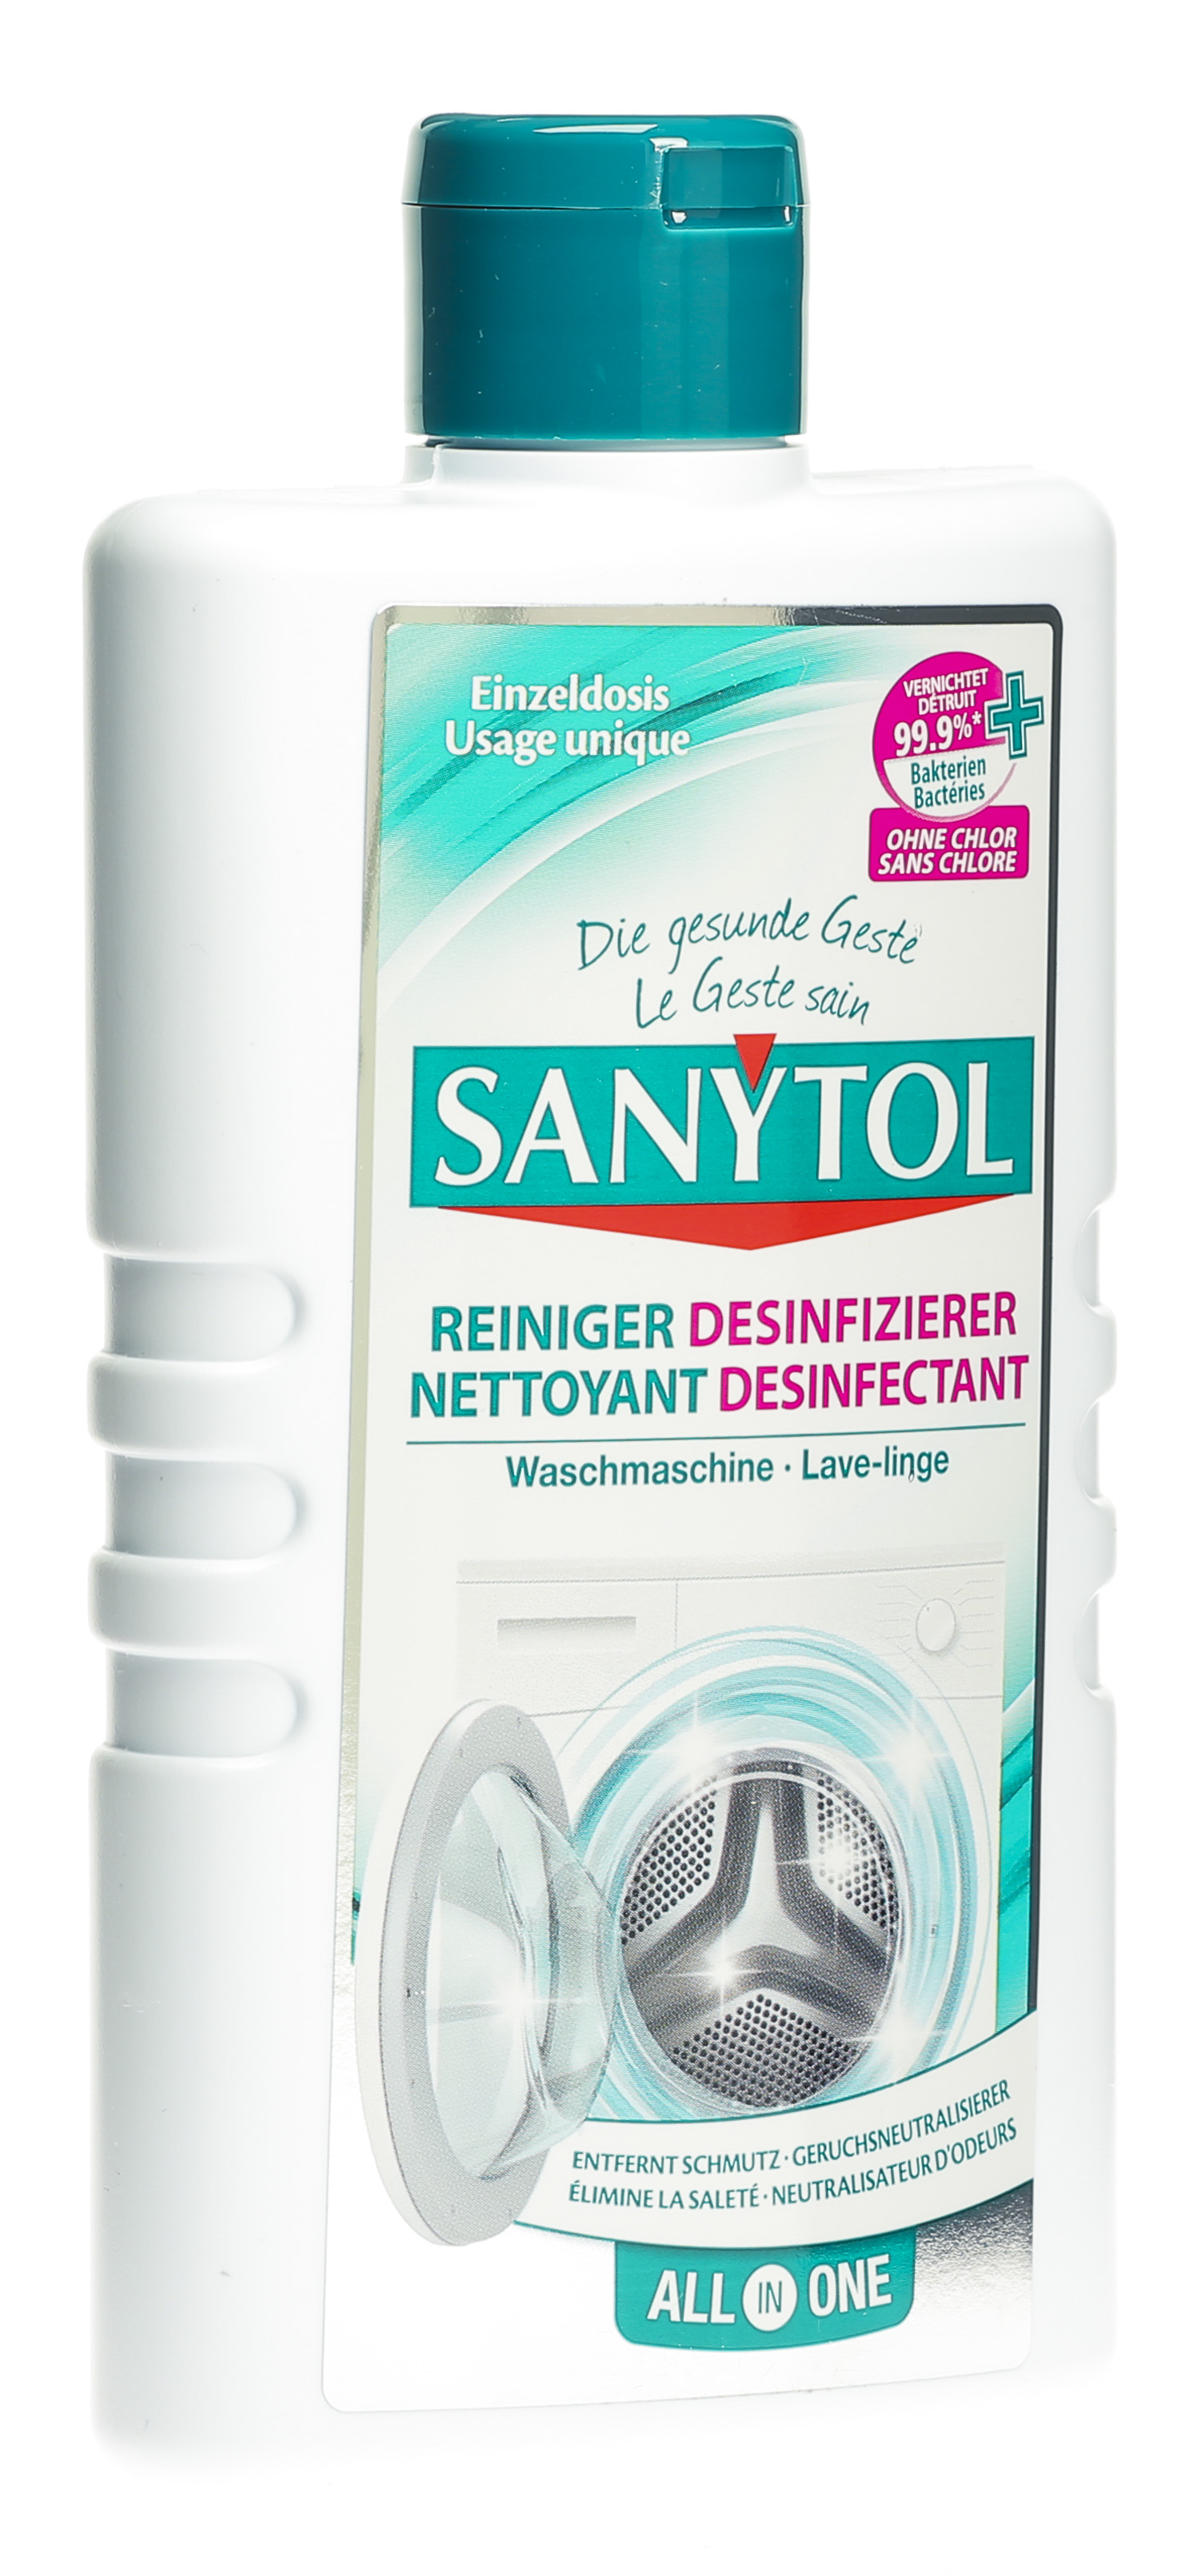 Sanytol désinfectant linge - 2 LITRES